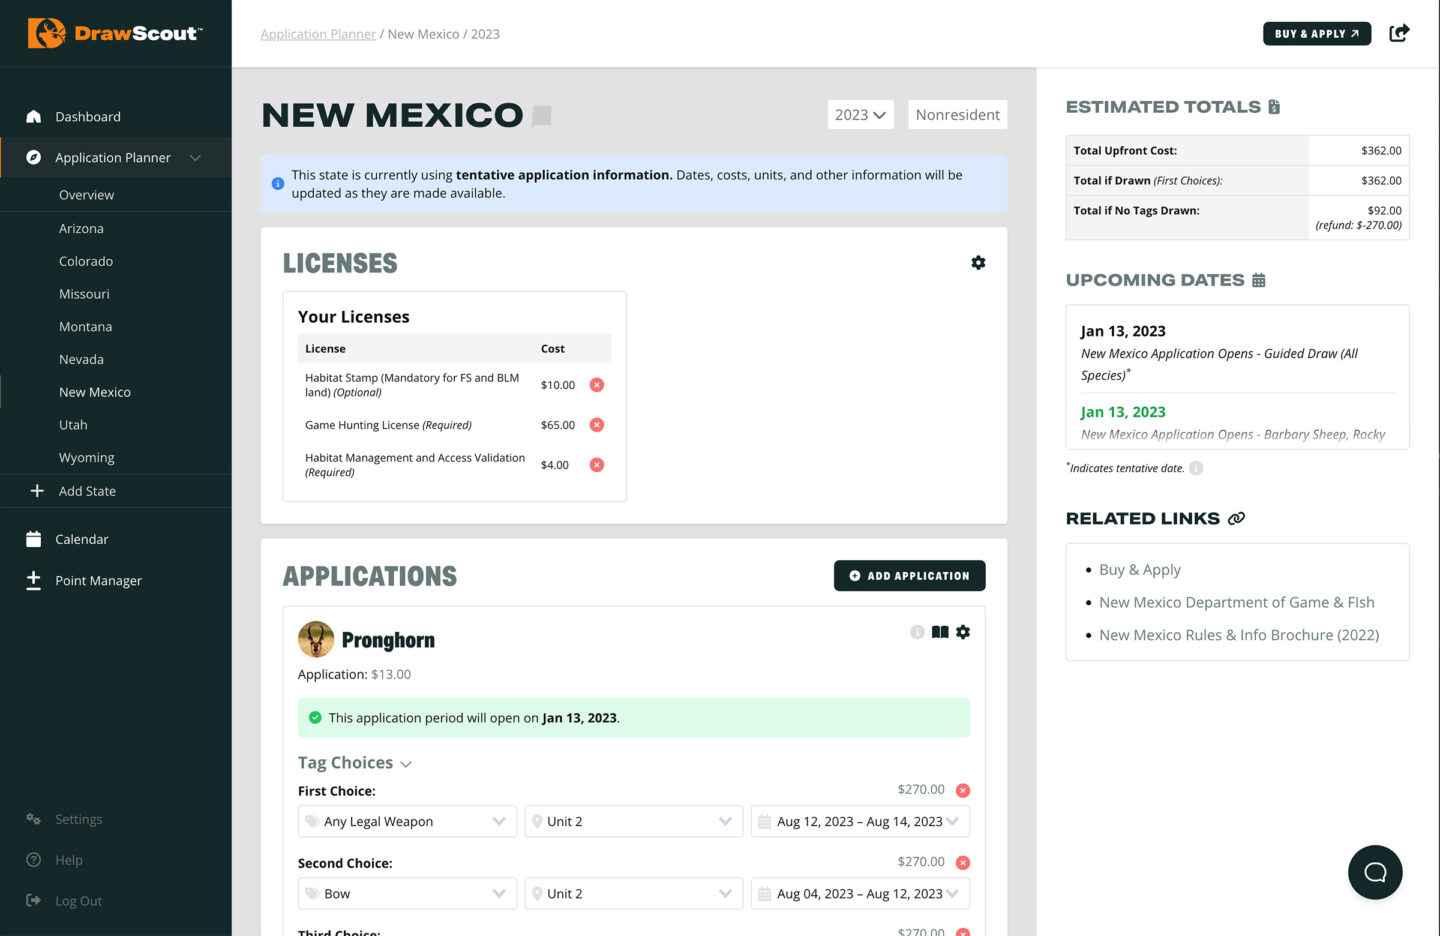 DrawScout New Mexico Application Plan